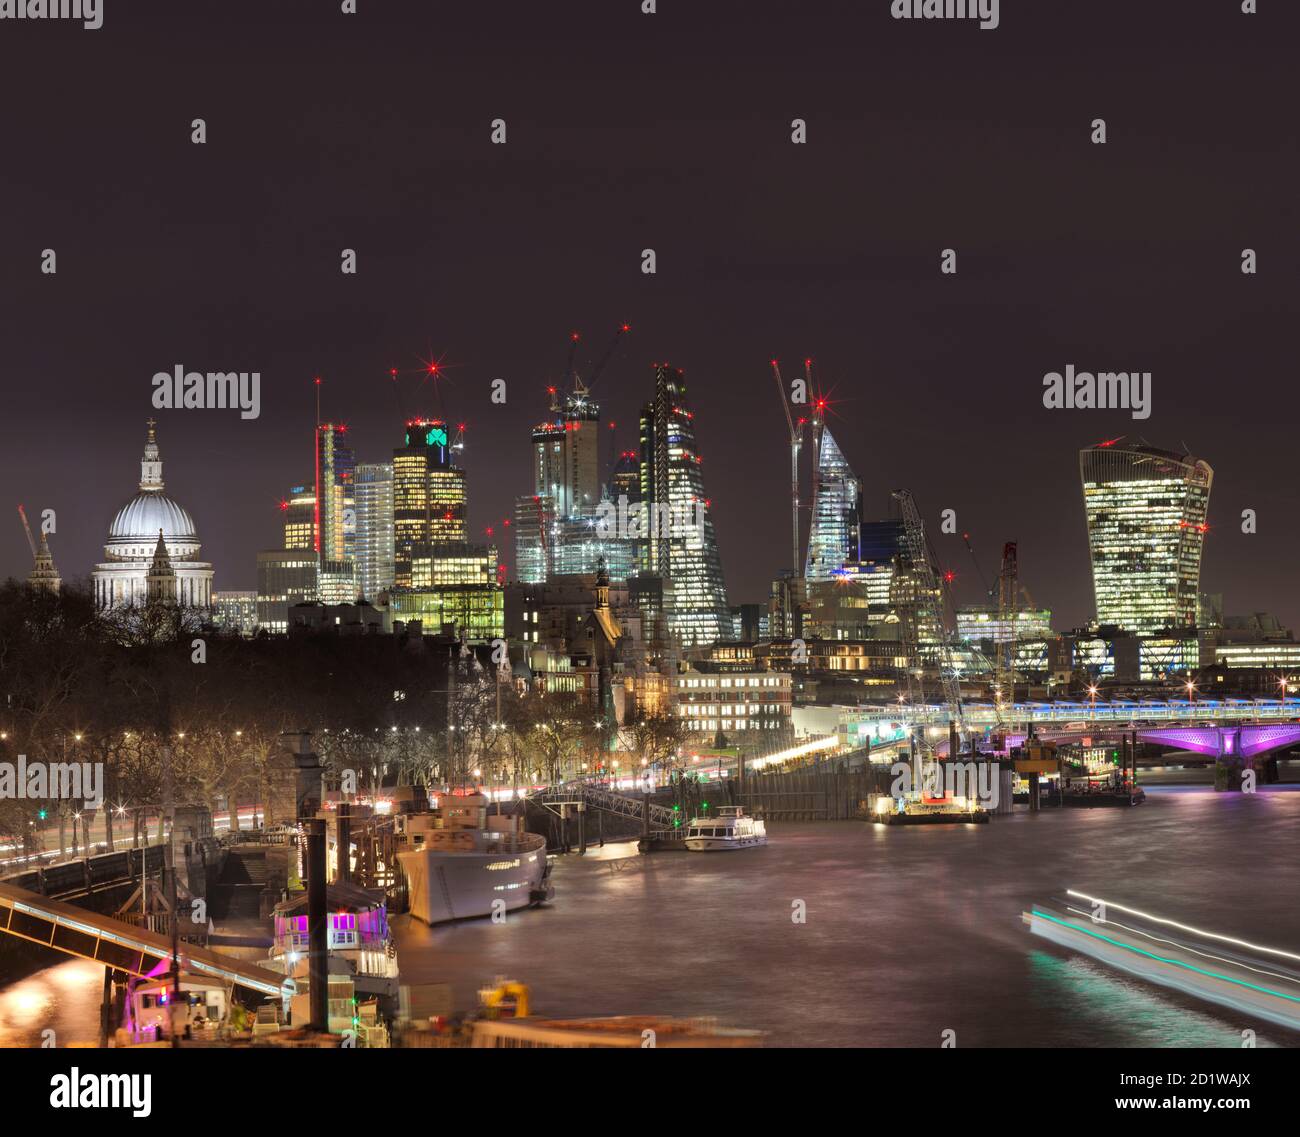 City And County Of The City Of London, Greater London Authority. Allgemeiner Blick Richtung Osten entlang der Themse von der Waterloo Bridge in Richtung City of London und St Paul's Cathedral, beleuchtet in der Nacht. Stockfoto